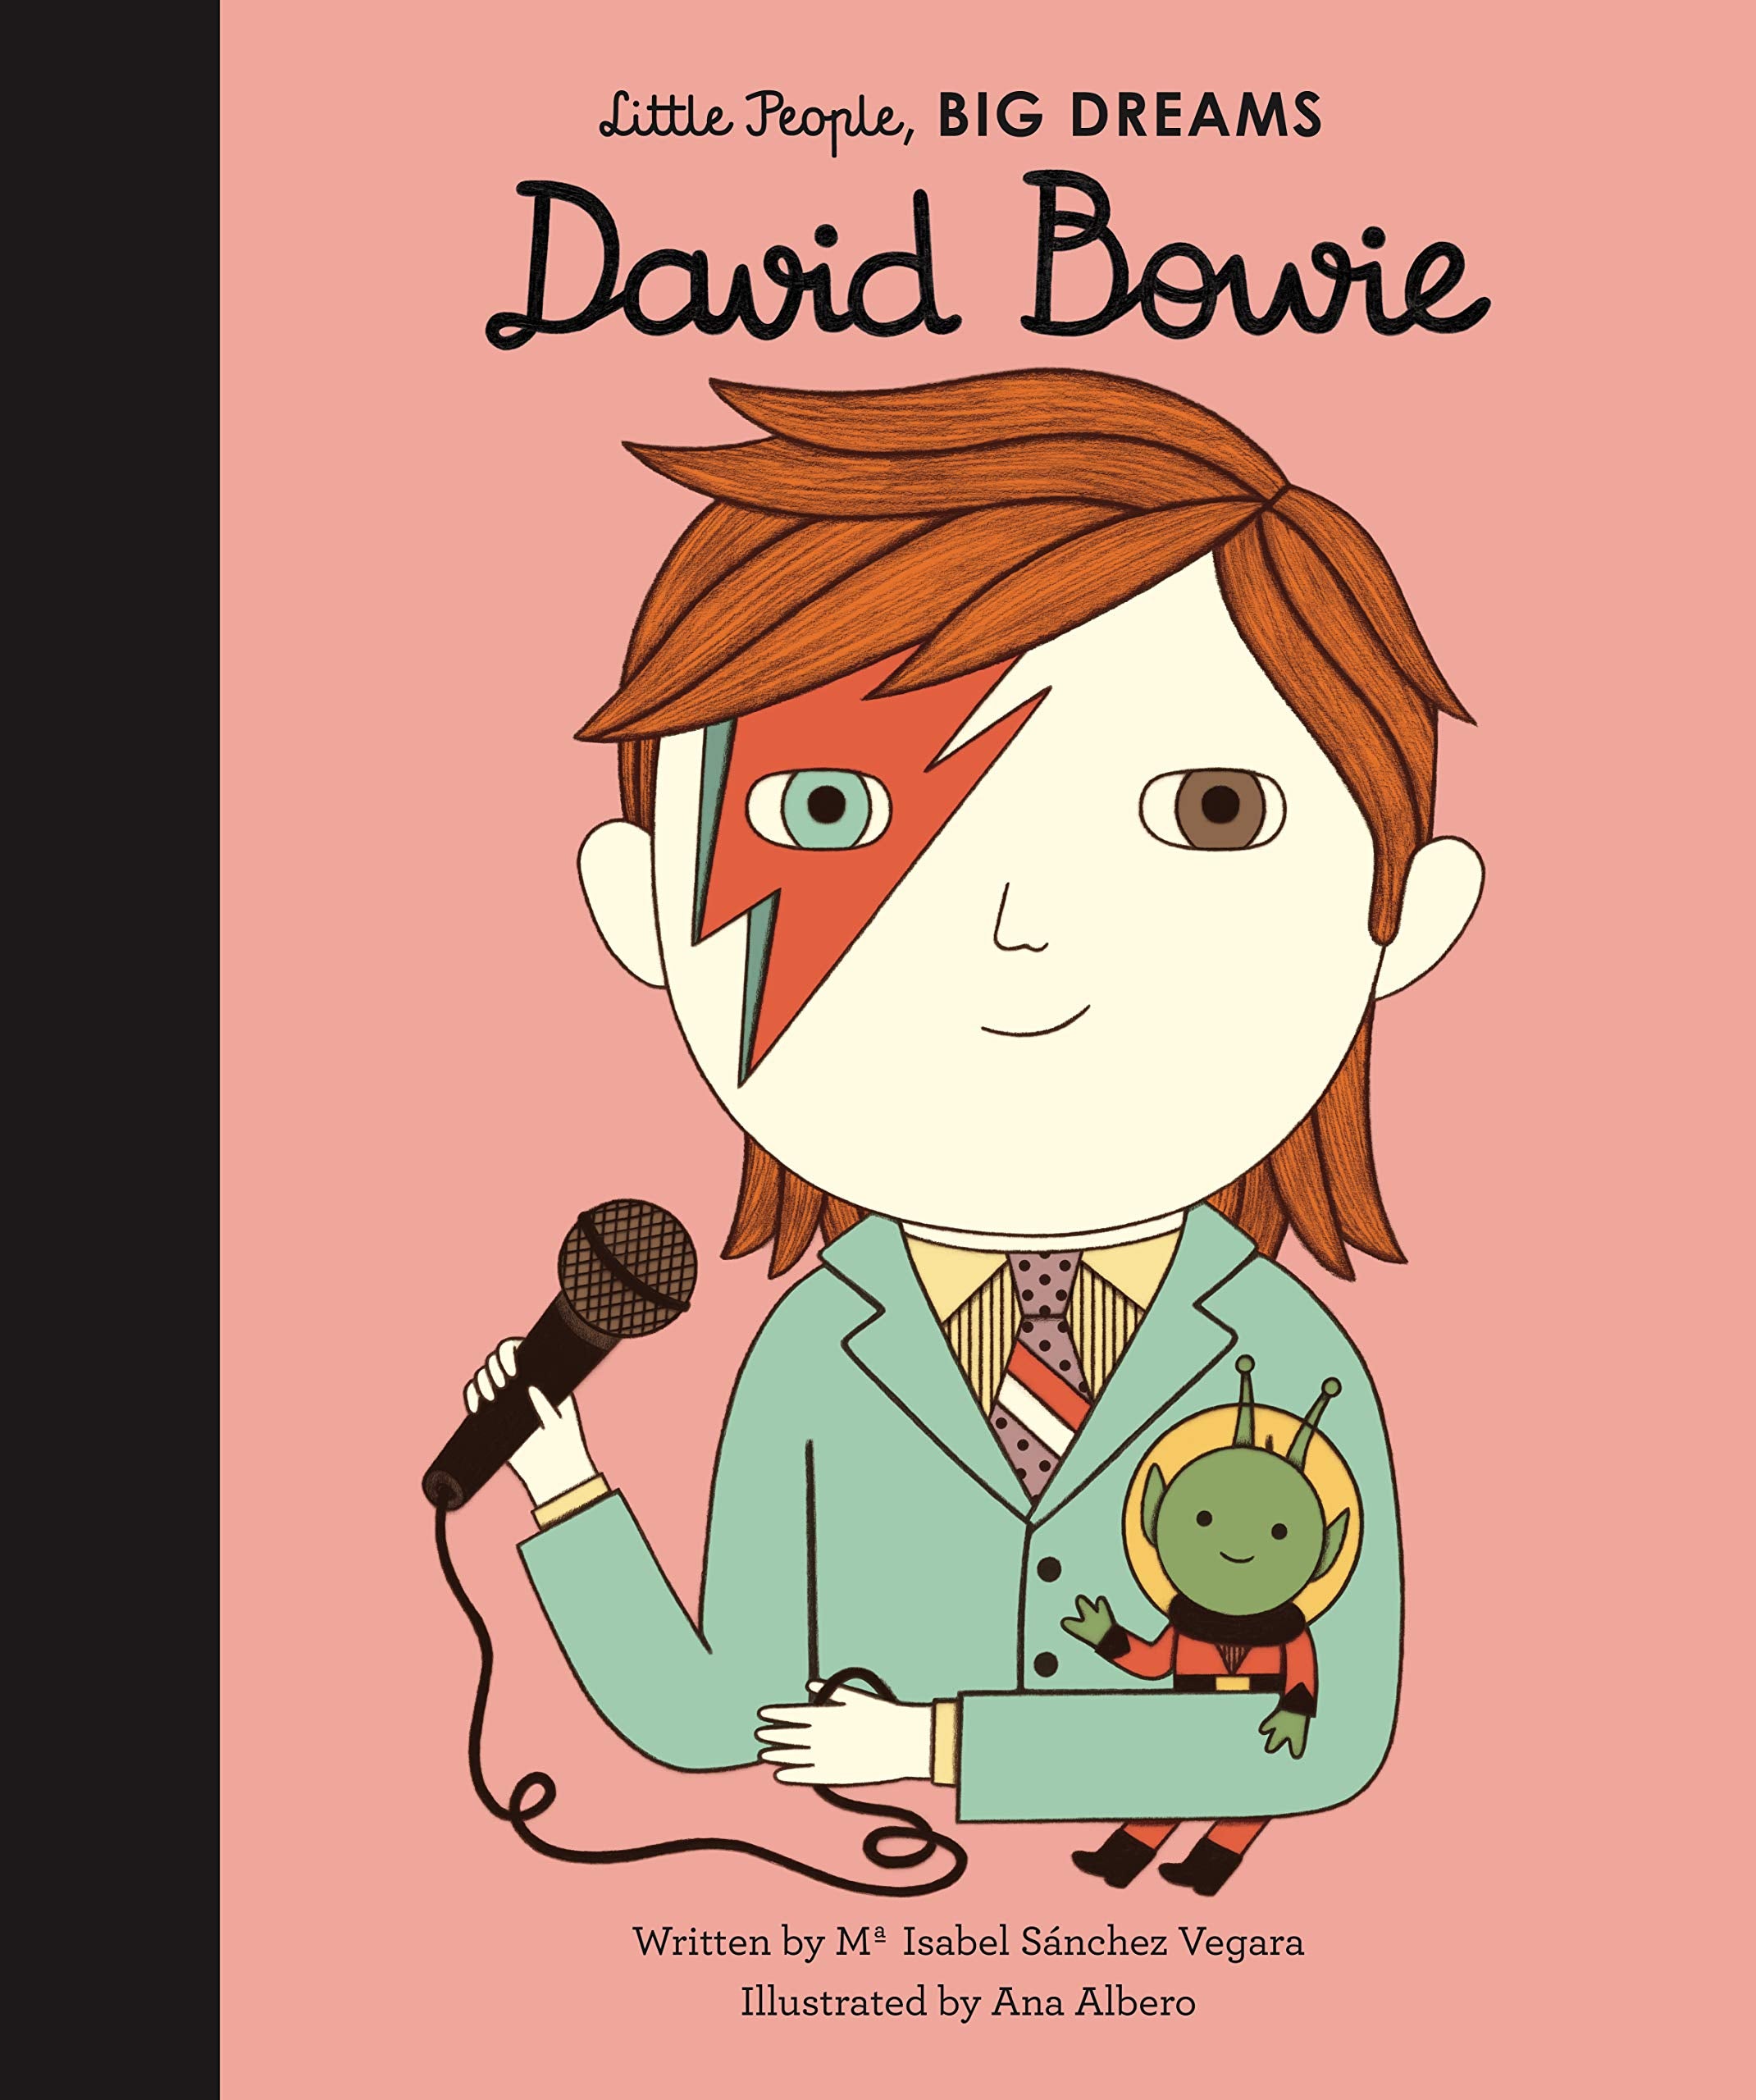 David Bowie - Little People Big Dreams